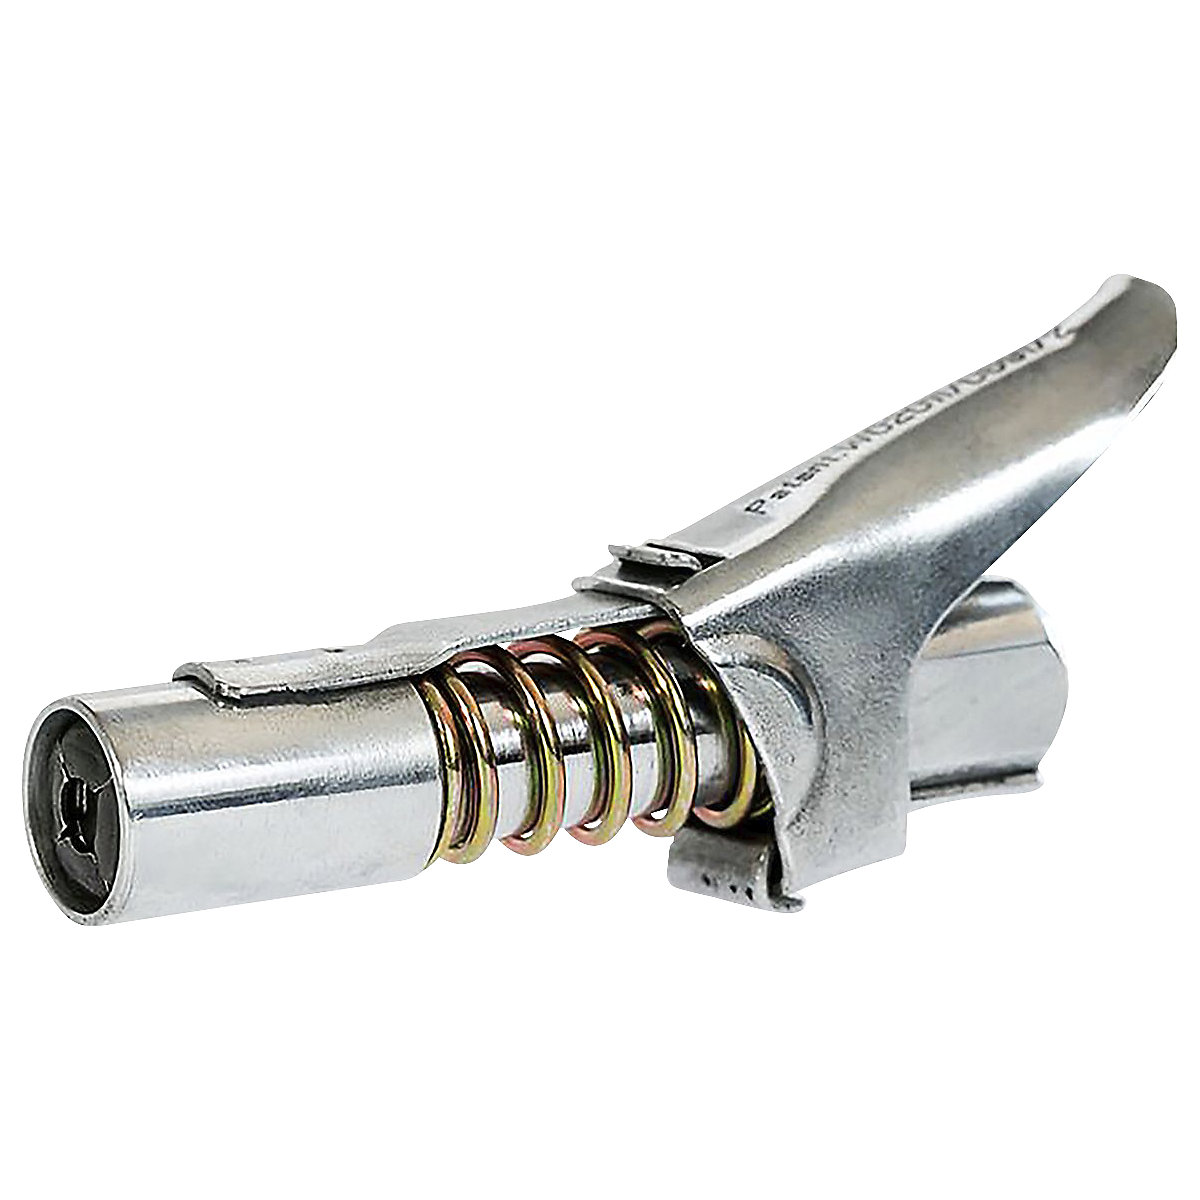 G coupler for grease gun mouthpiece – PRESSOL